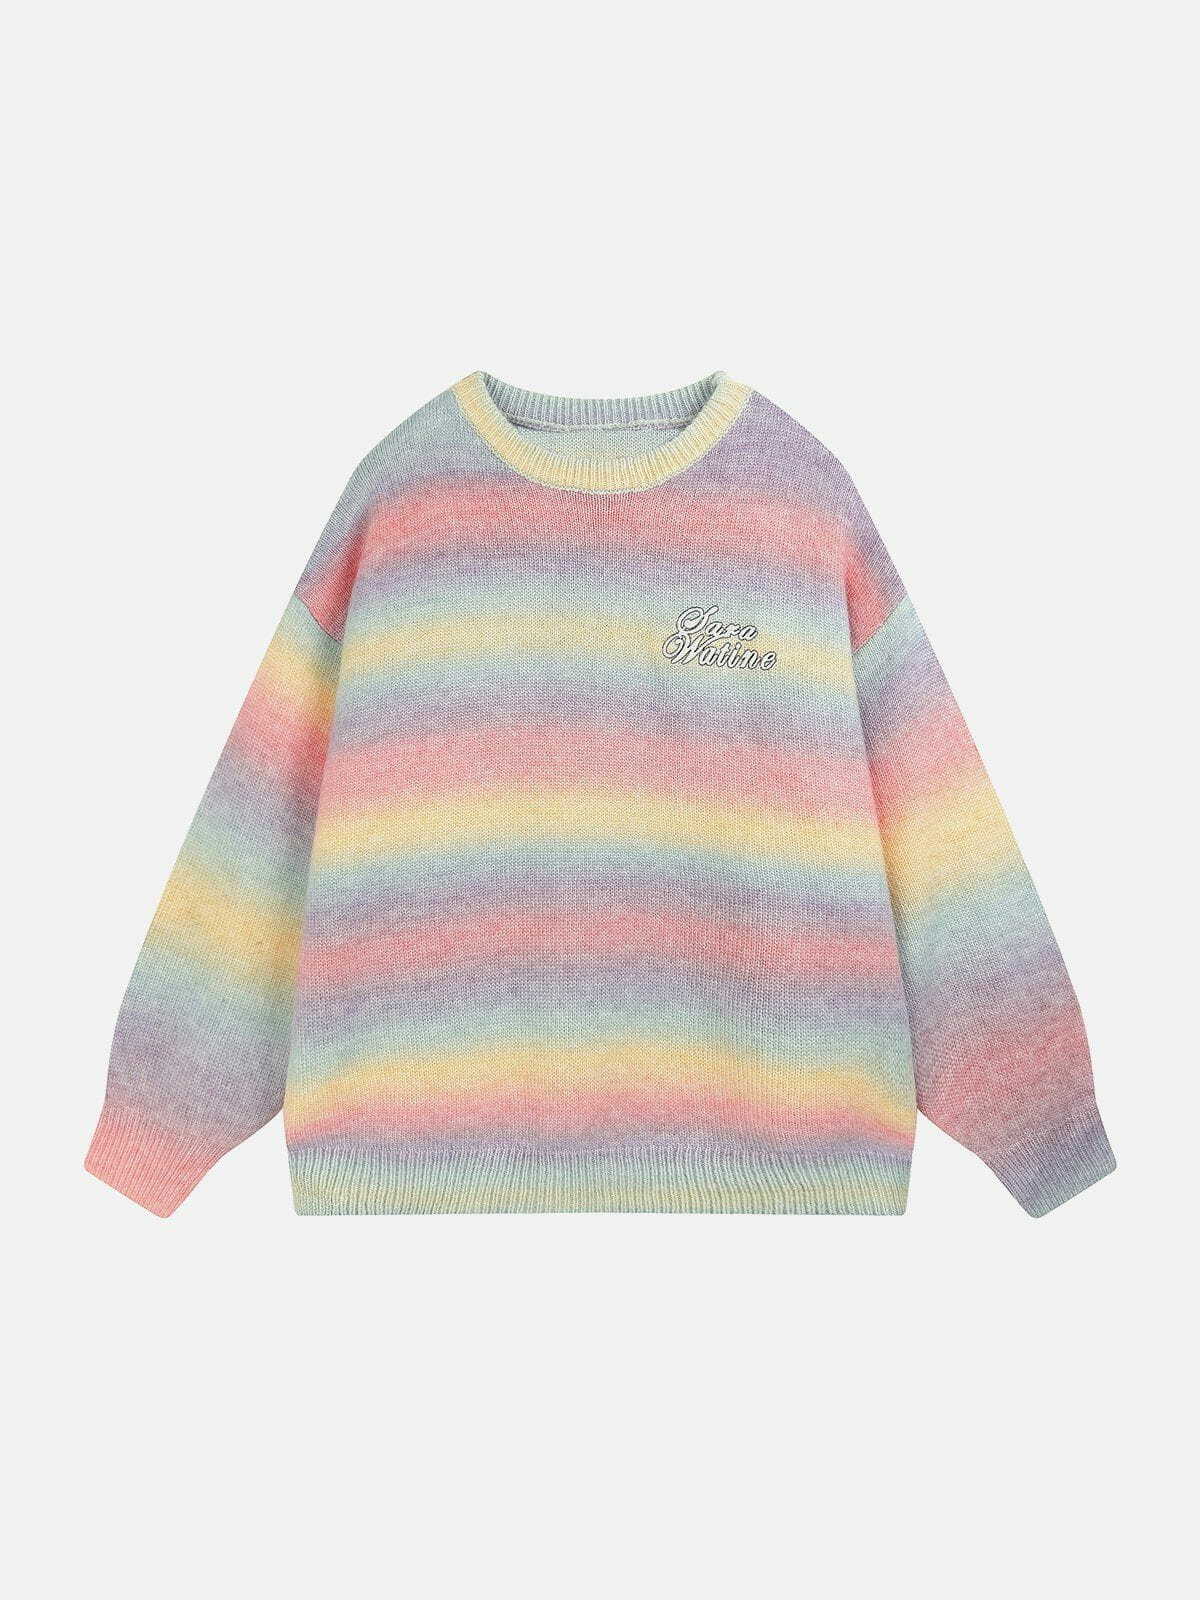 sleek striped gradient sweater urban edge & vibrant style 1126